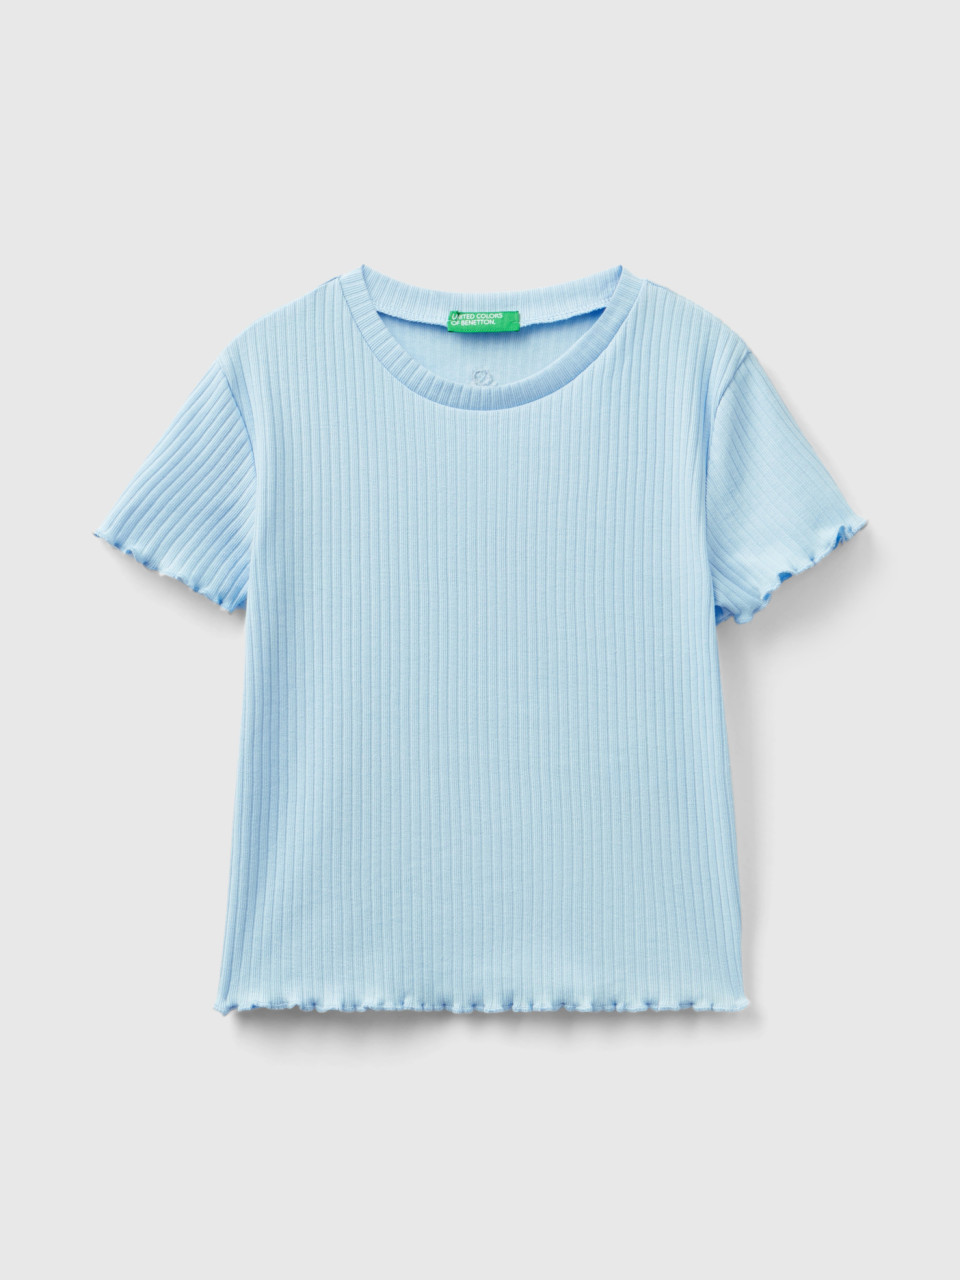 Benetton, Ribbed Short Sleeve T-shirt, Sky Blue, Kids